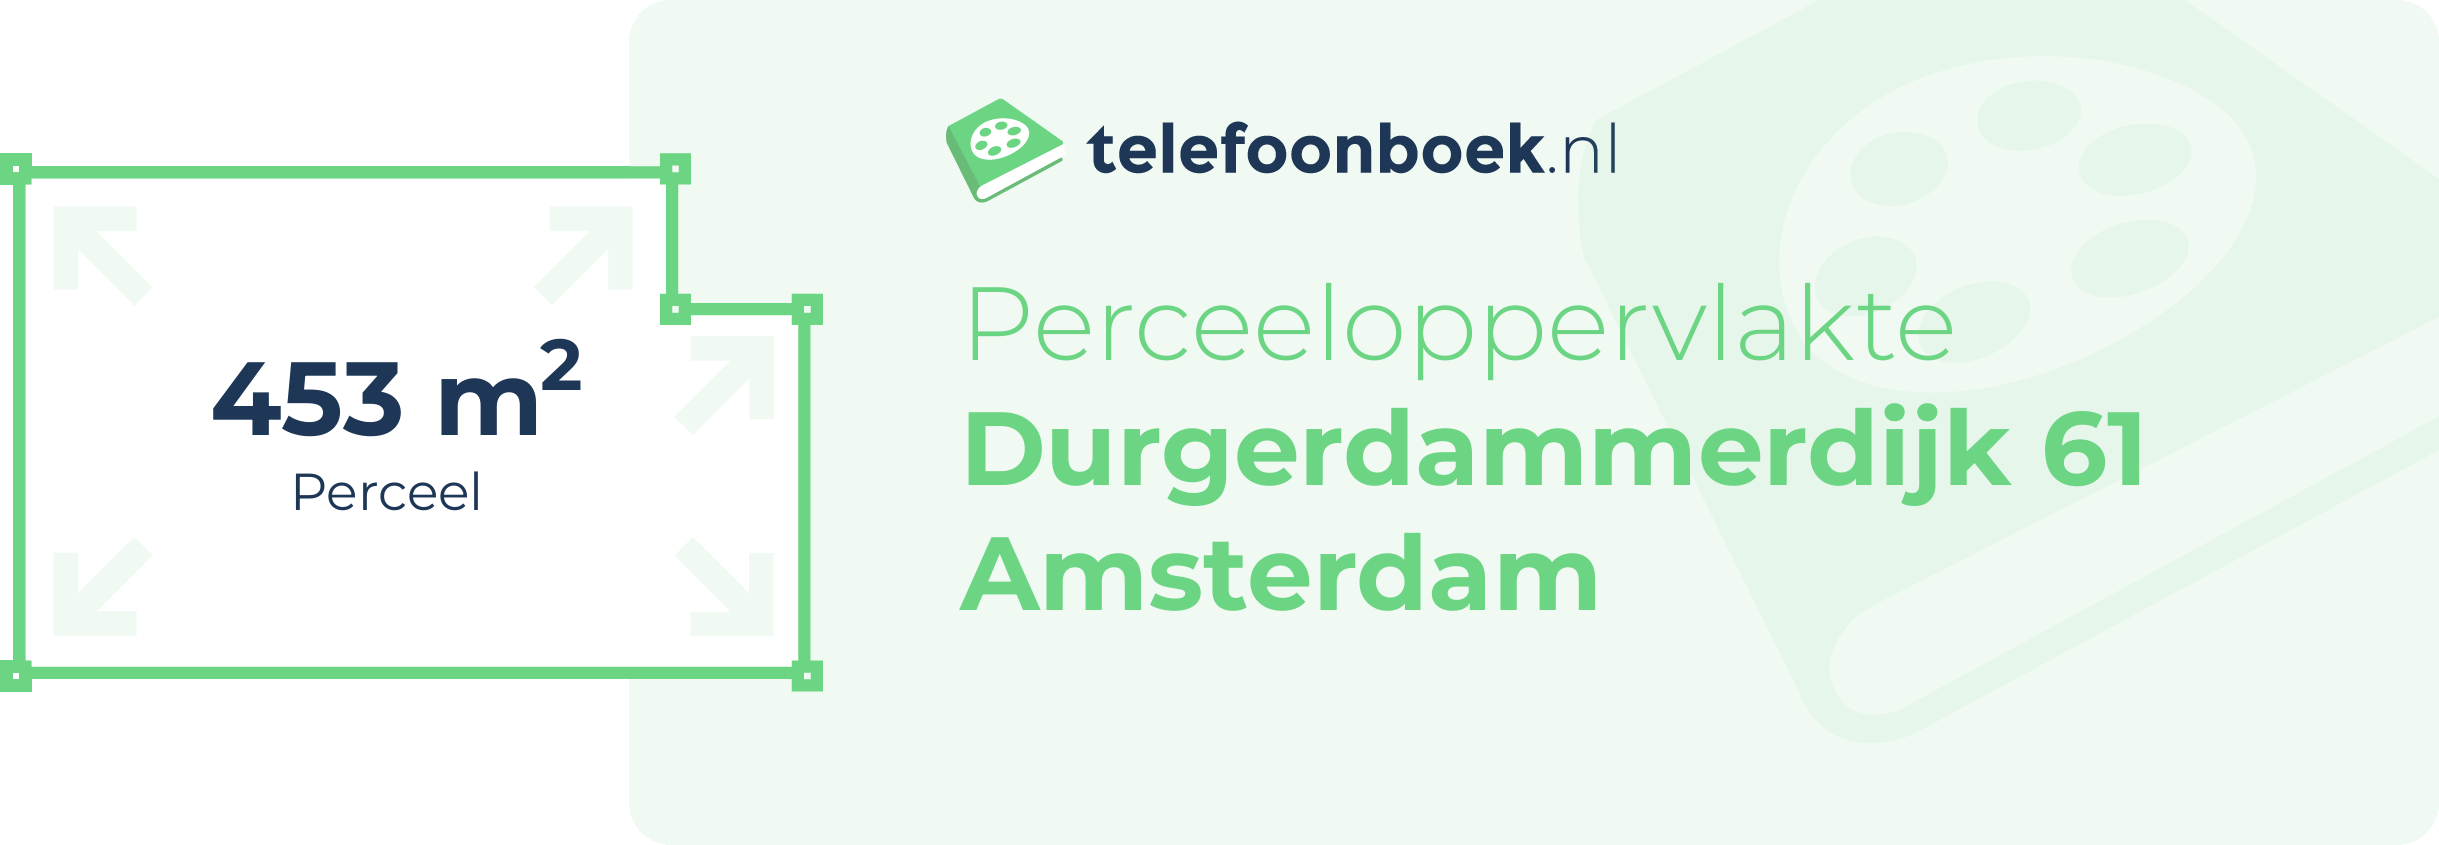 Perceeloppervlakte Durgerdammerdijk 61 Amsterdam